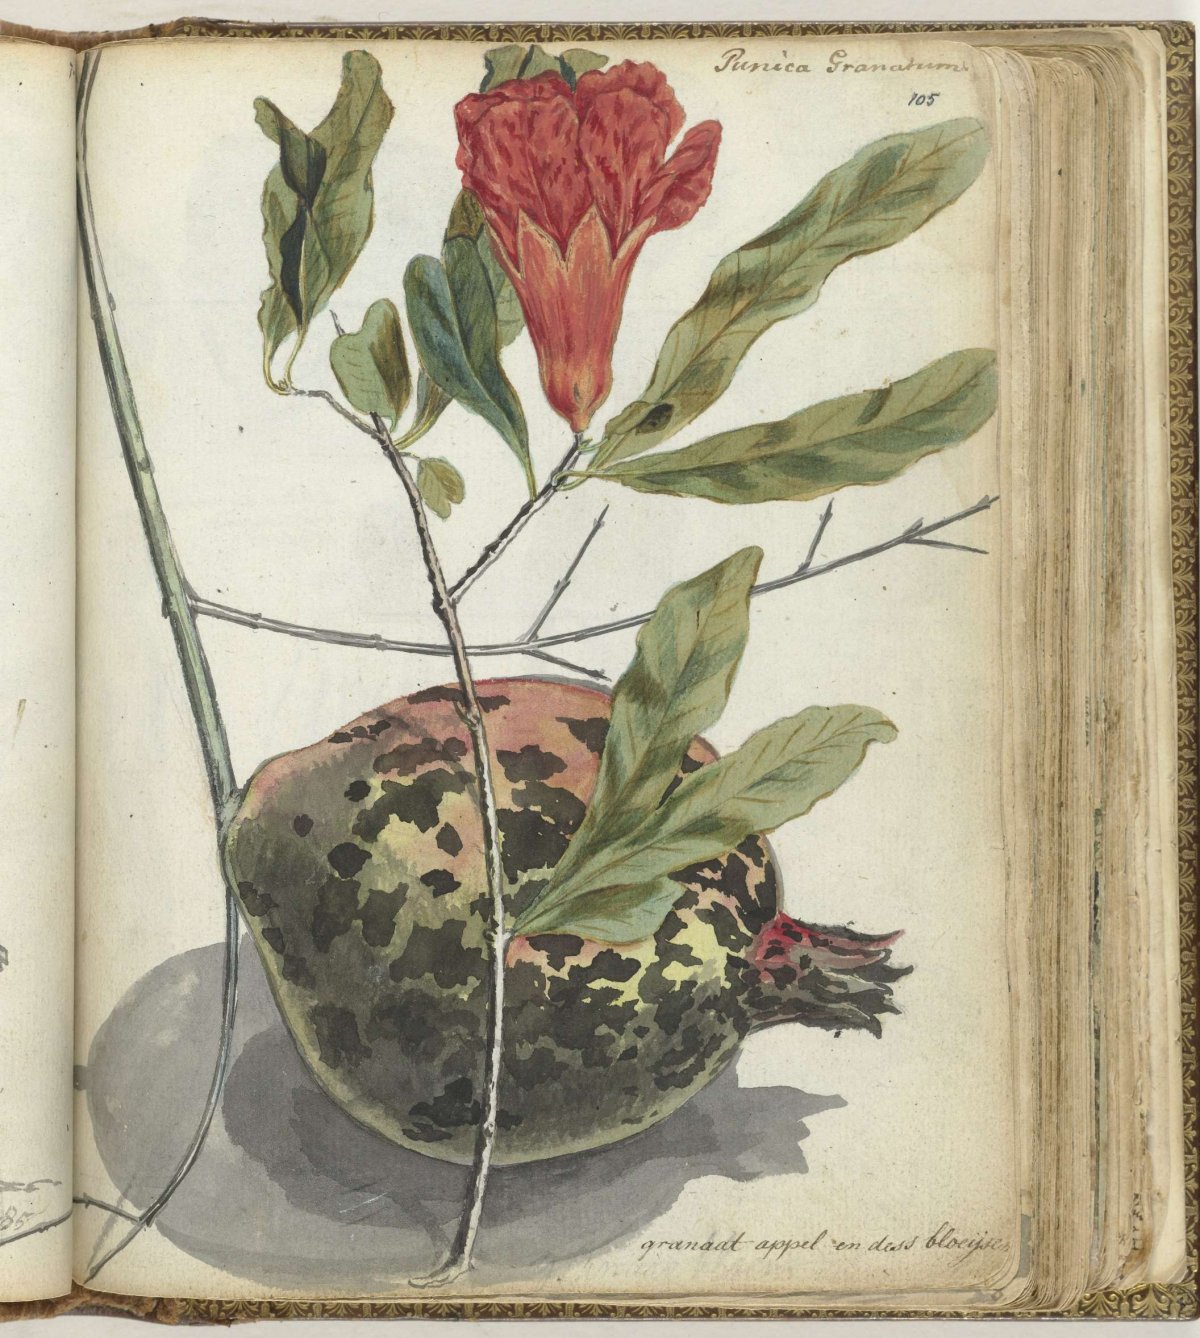 Pomegranate, Jan Brandes, 1779 - 1787